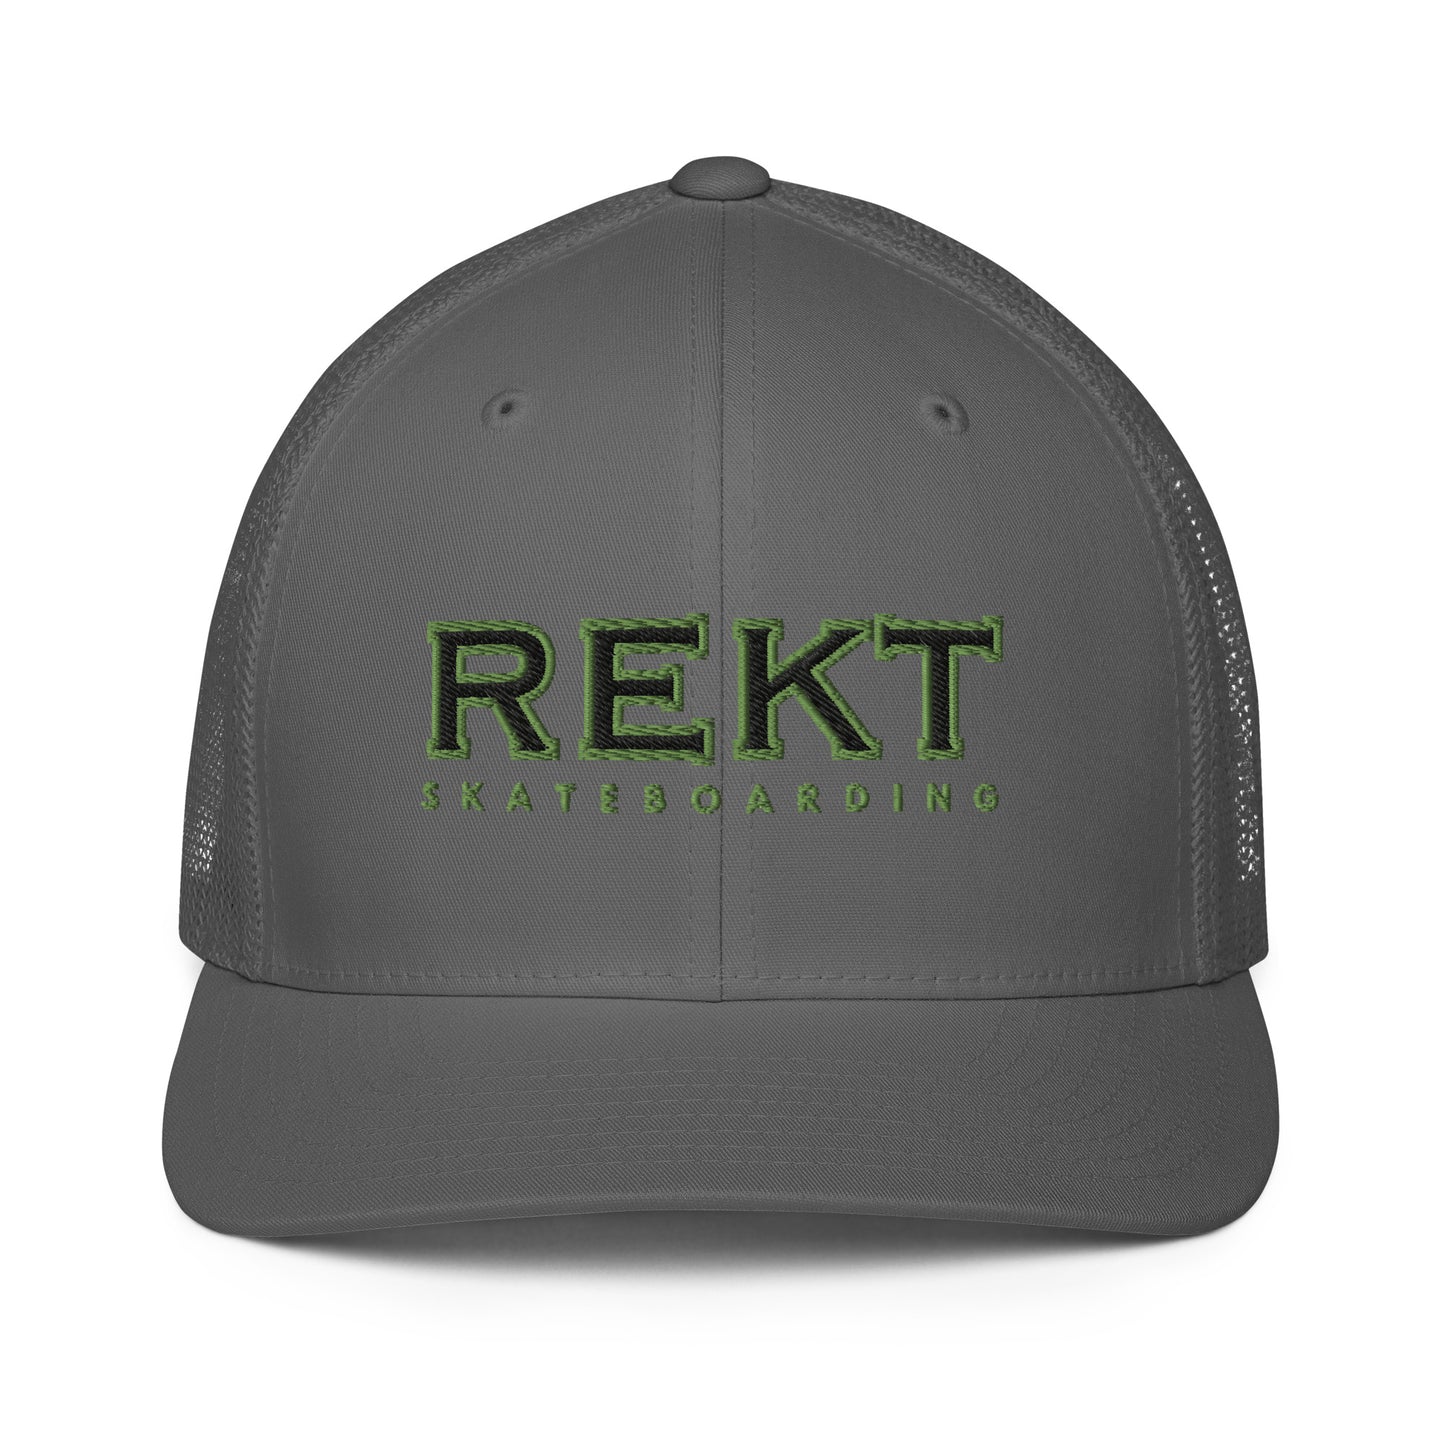 REKT Skateboarding Flex-fit Closed-back trucker cap